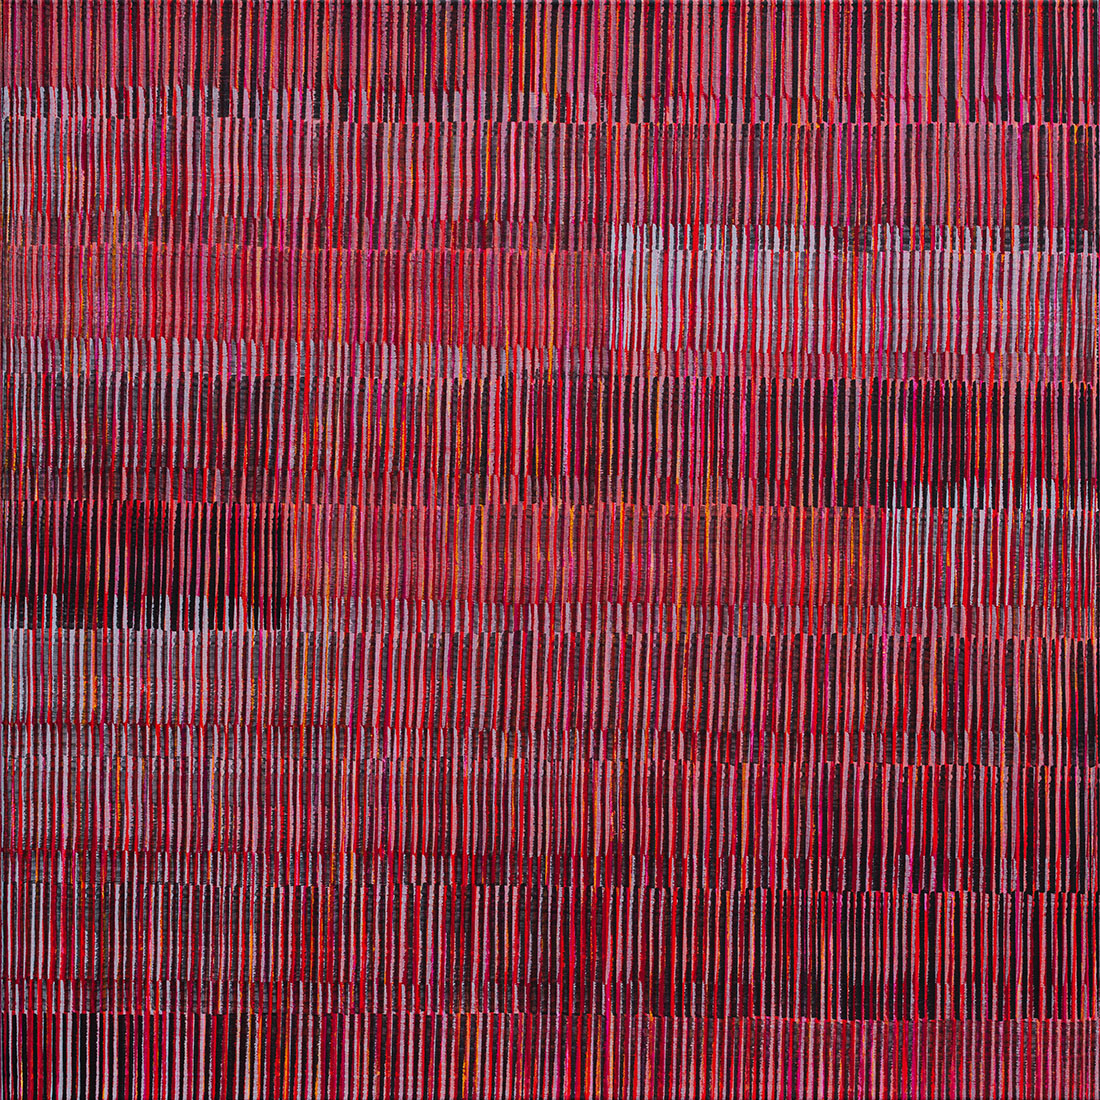 Nikola Dimitrov, FarbraumRot II, 2019, Pigmente, Bindemittel auf Leinwand, 70 × 70 cm